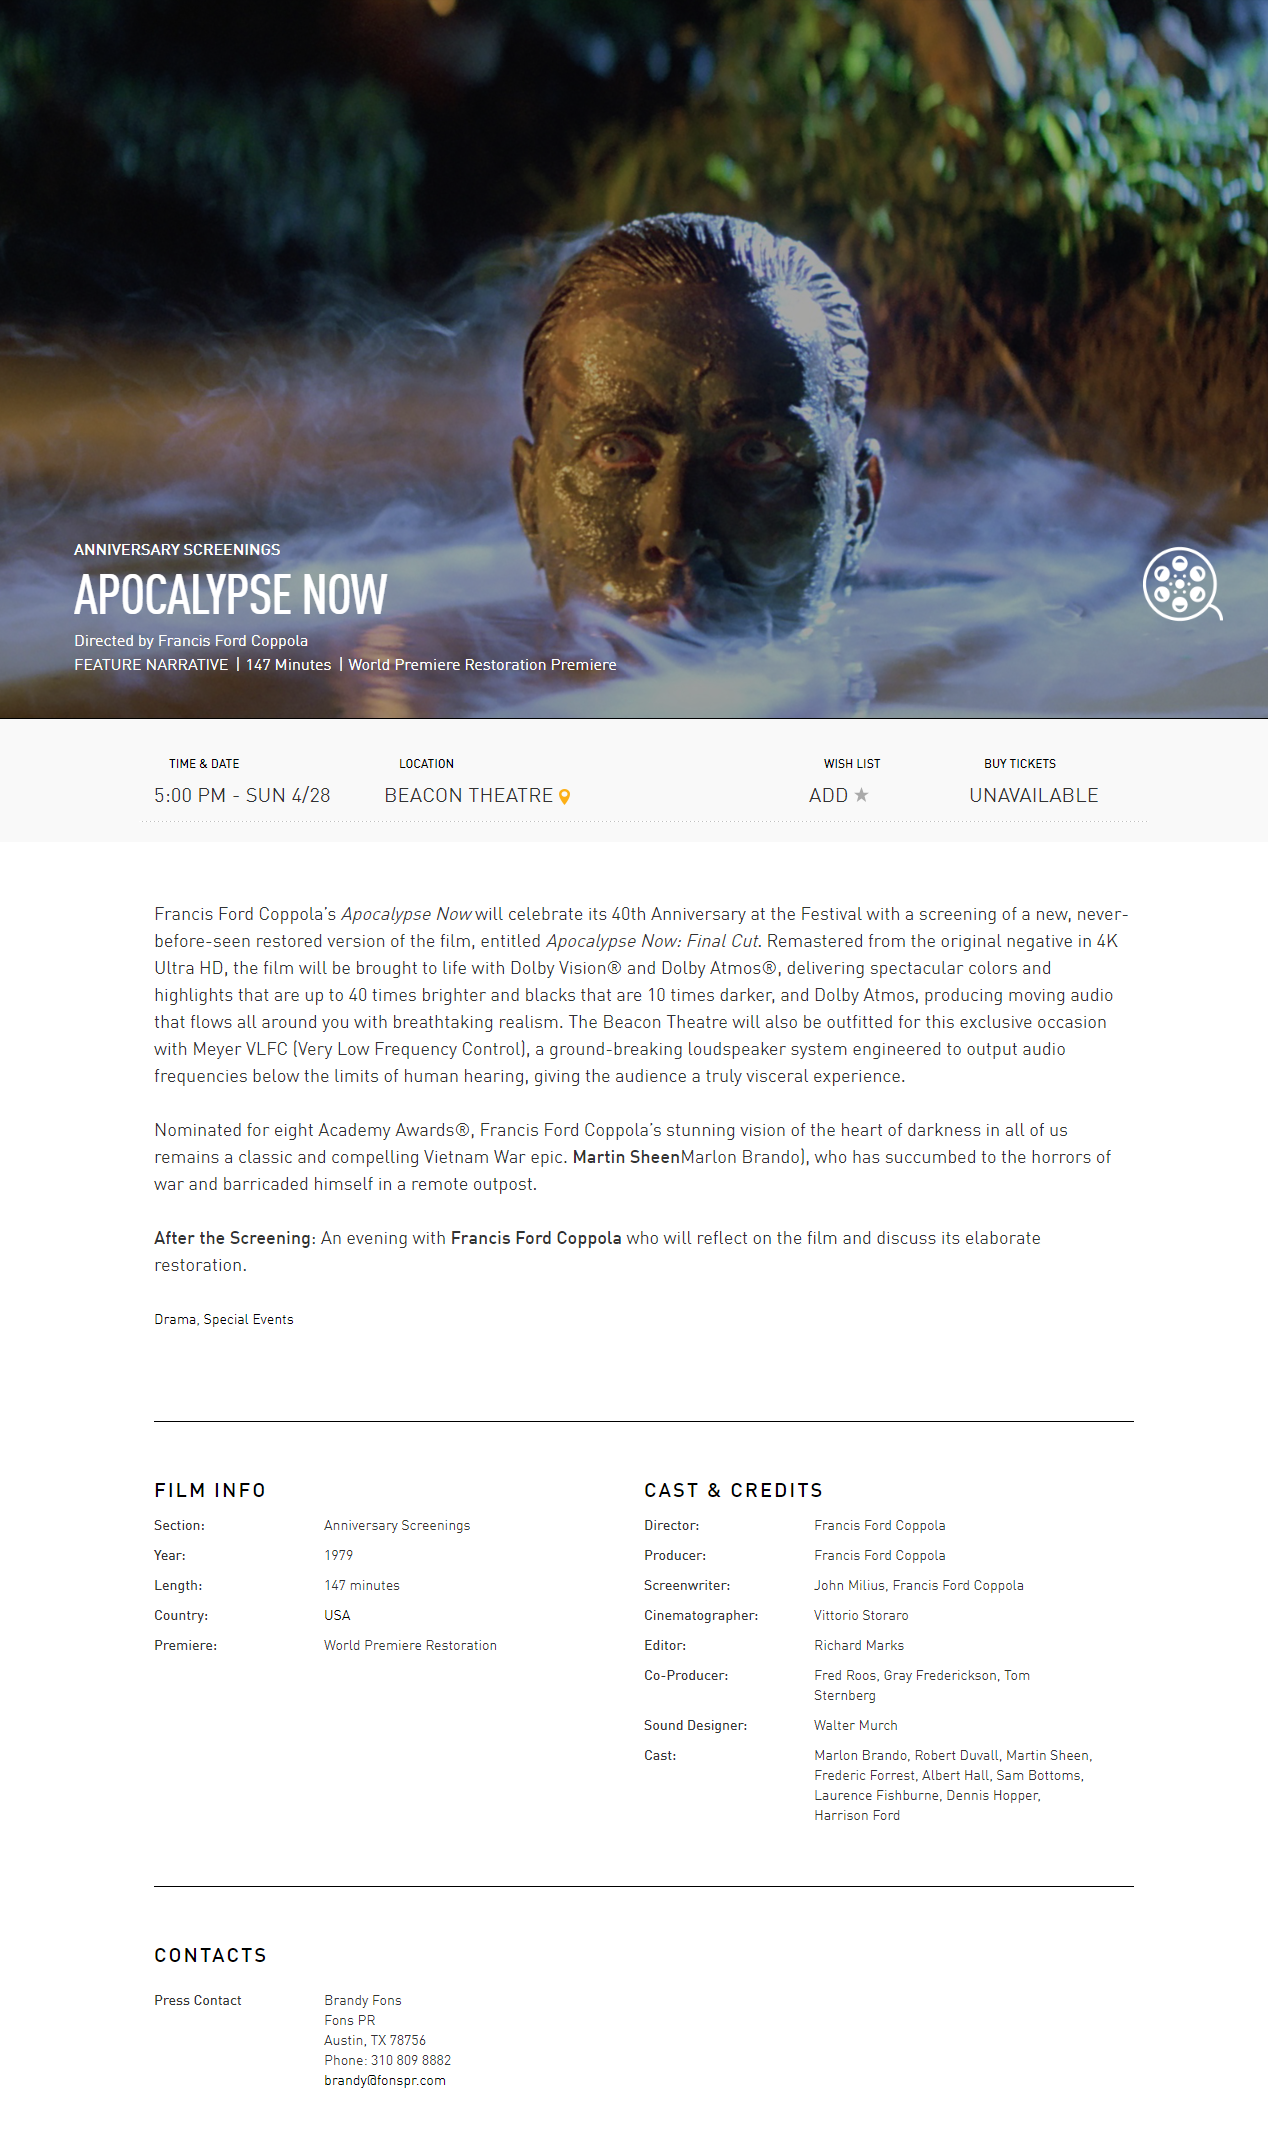 Apocalypse Now - 2019 Tribeca Film Festival.png